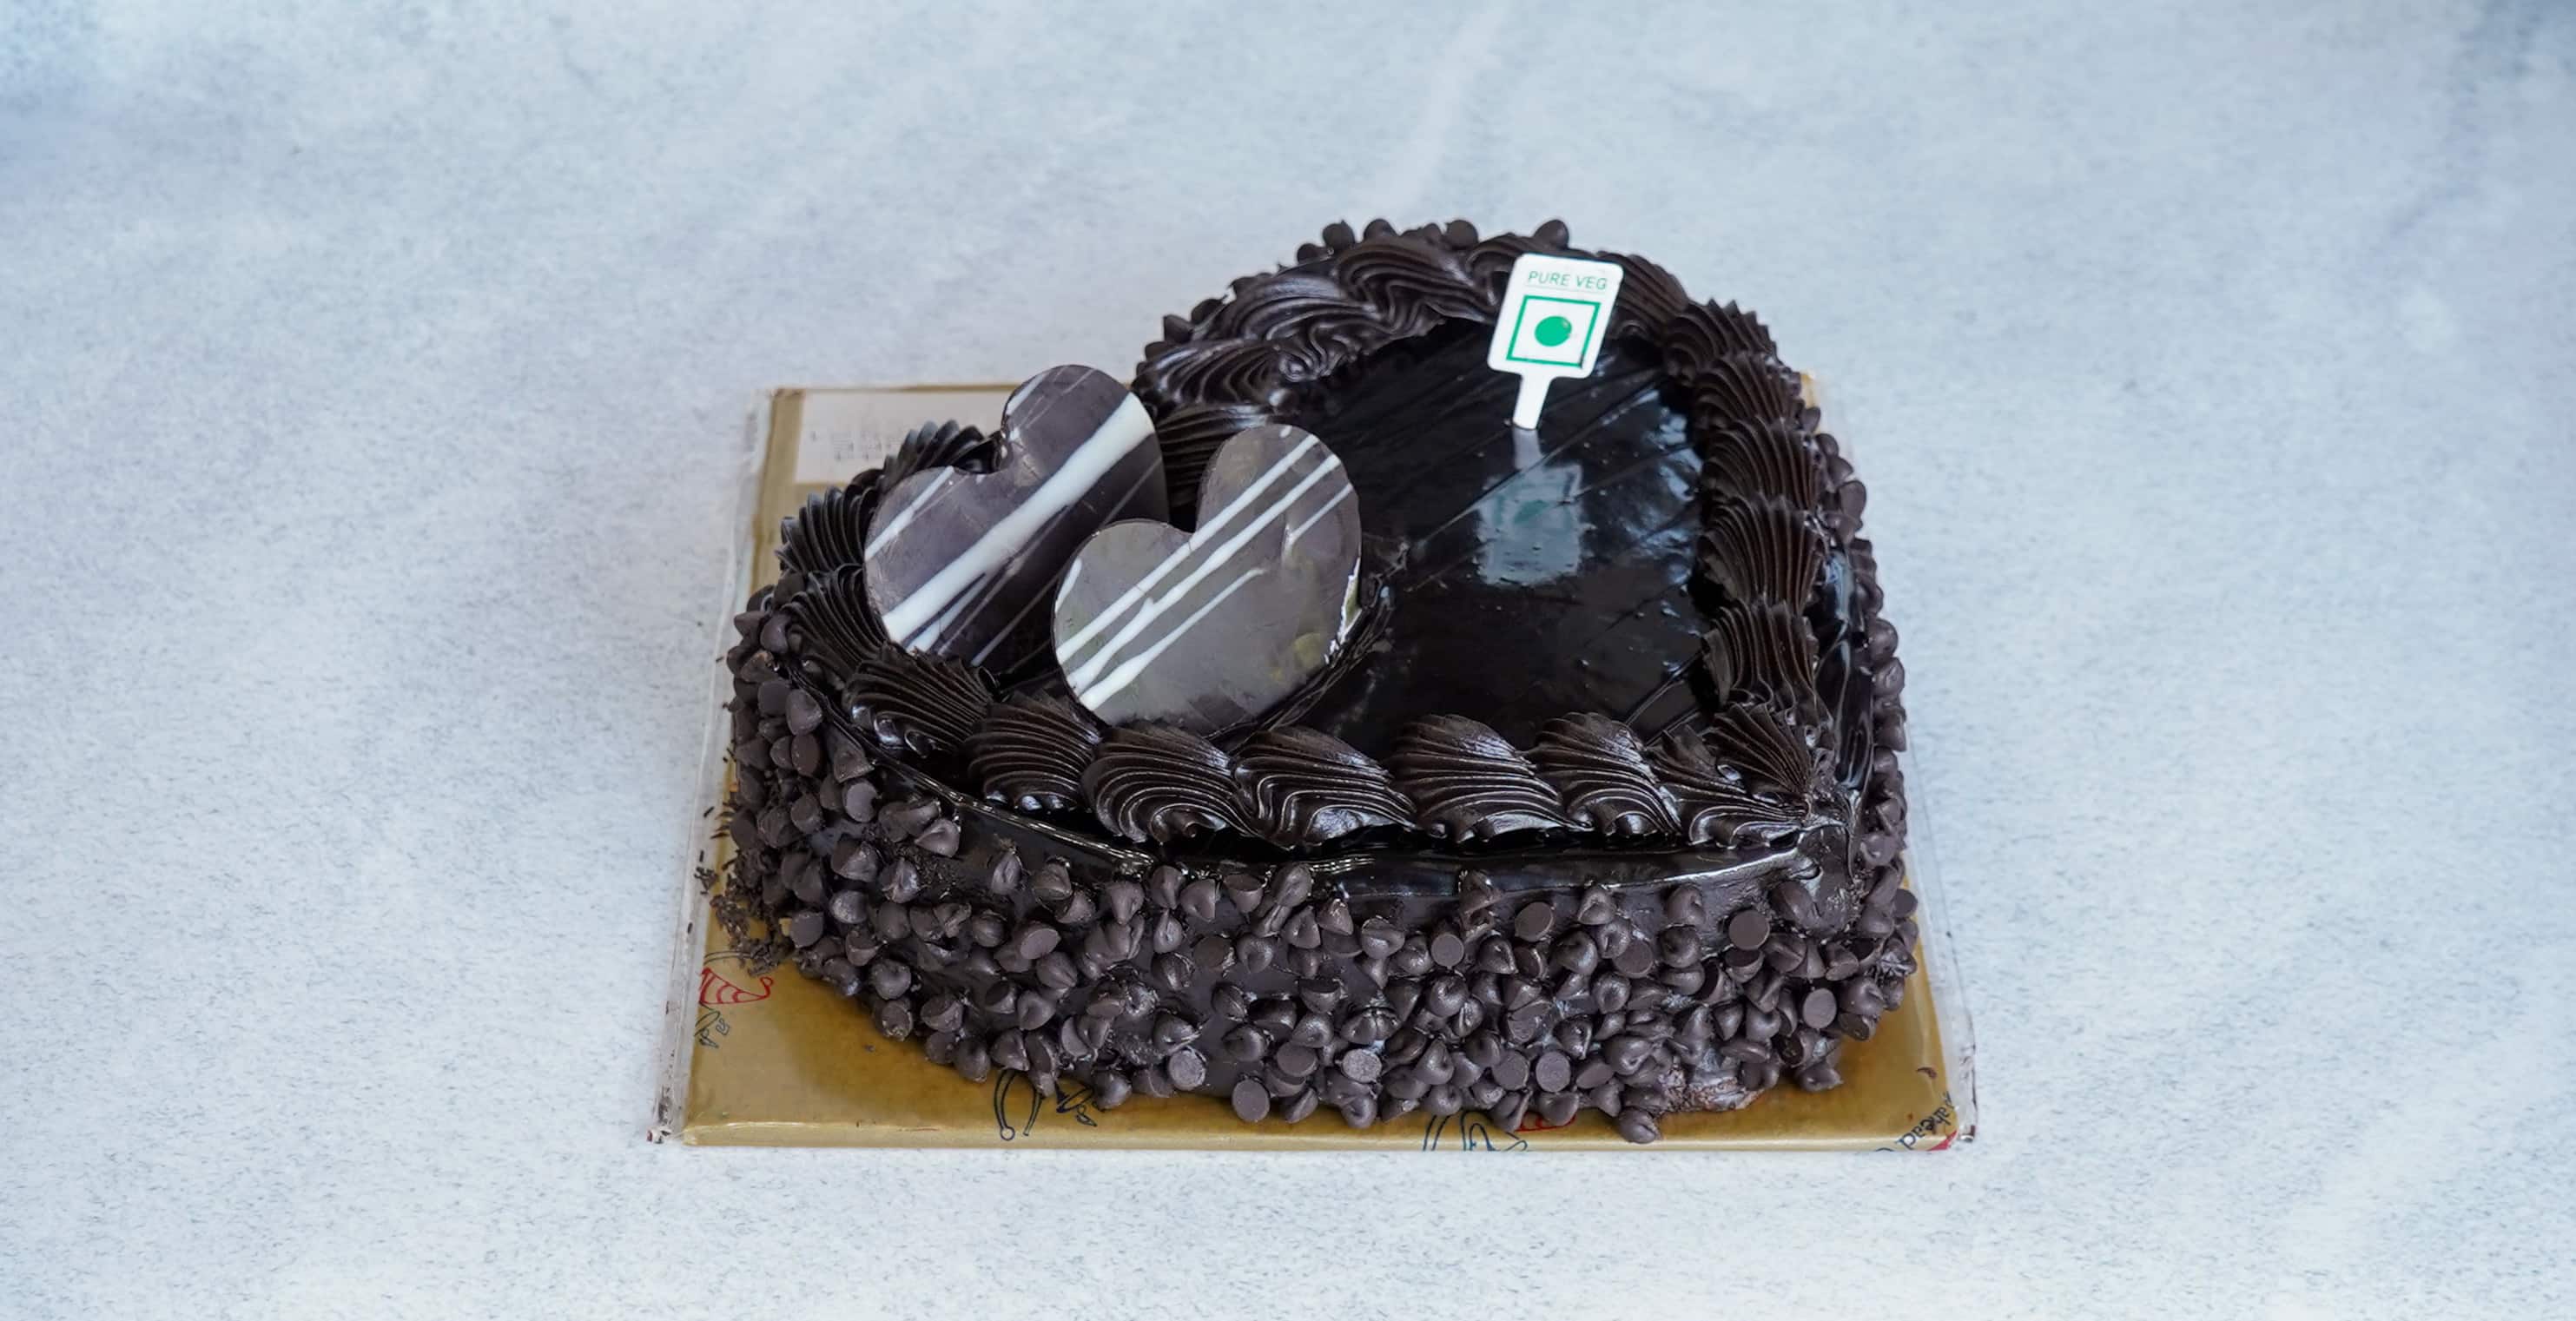 Reviews of 6 Muffiins The Cake Shop, Baner, Pune | Zomato